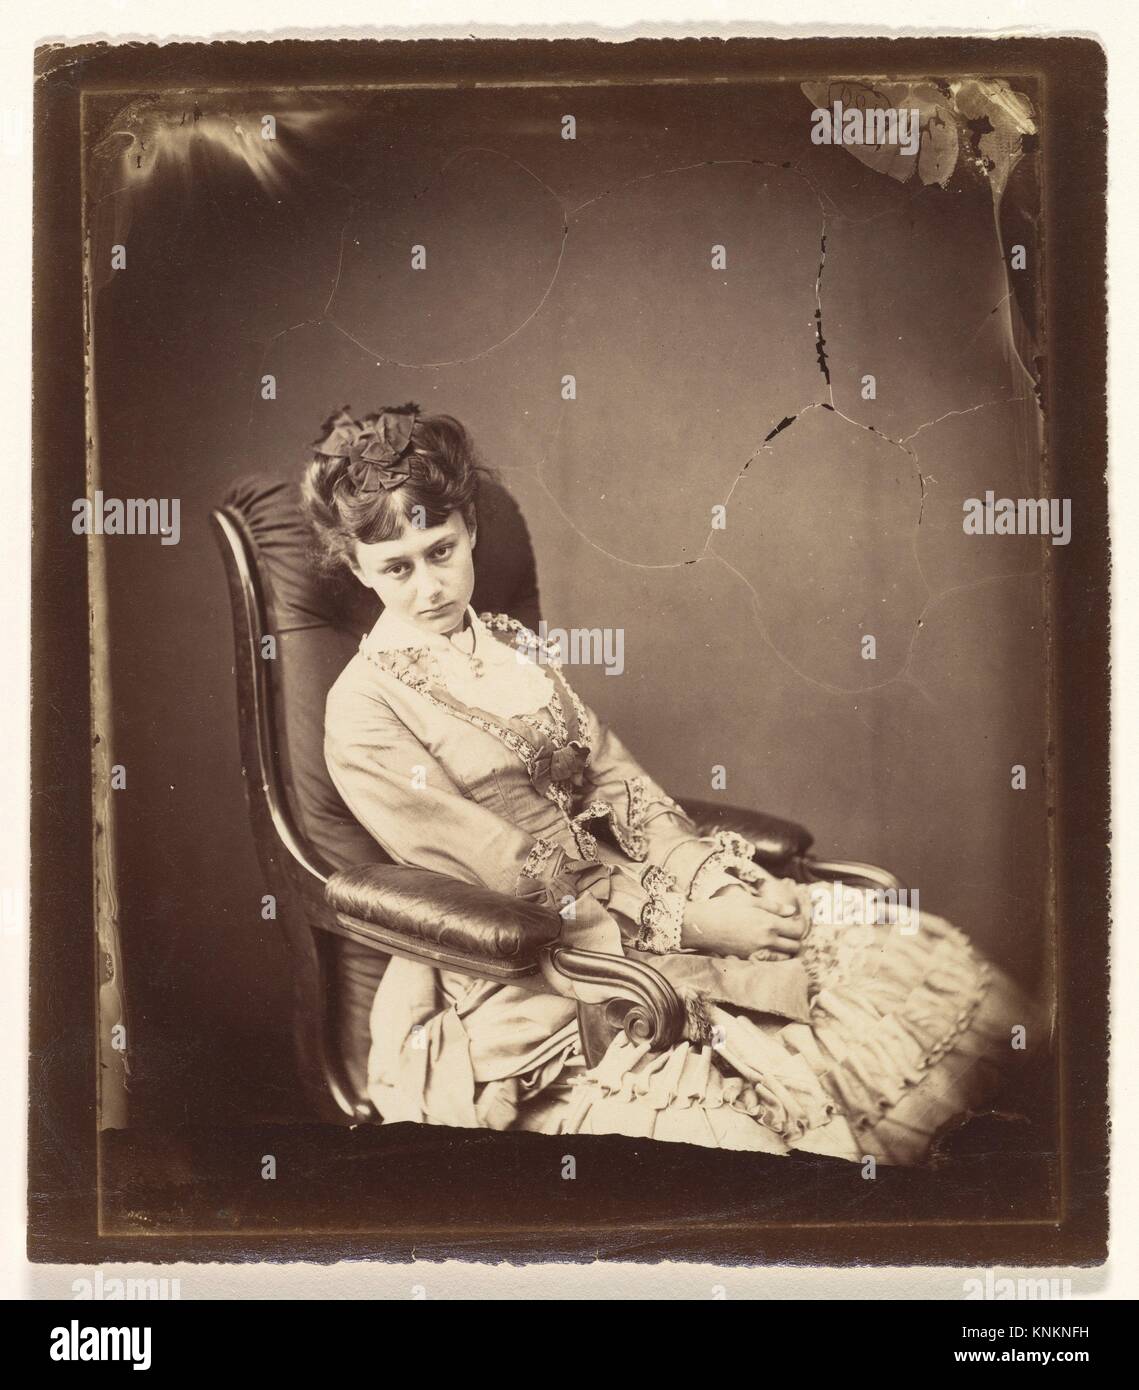 L' ultima seduta. Artista: Lewis Carroll (British, Daresbury, Cheshire 1832-1898 Guildford); persona in fotografia: Persona in fotografia Alice Foto Stock